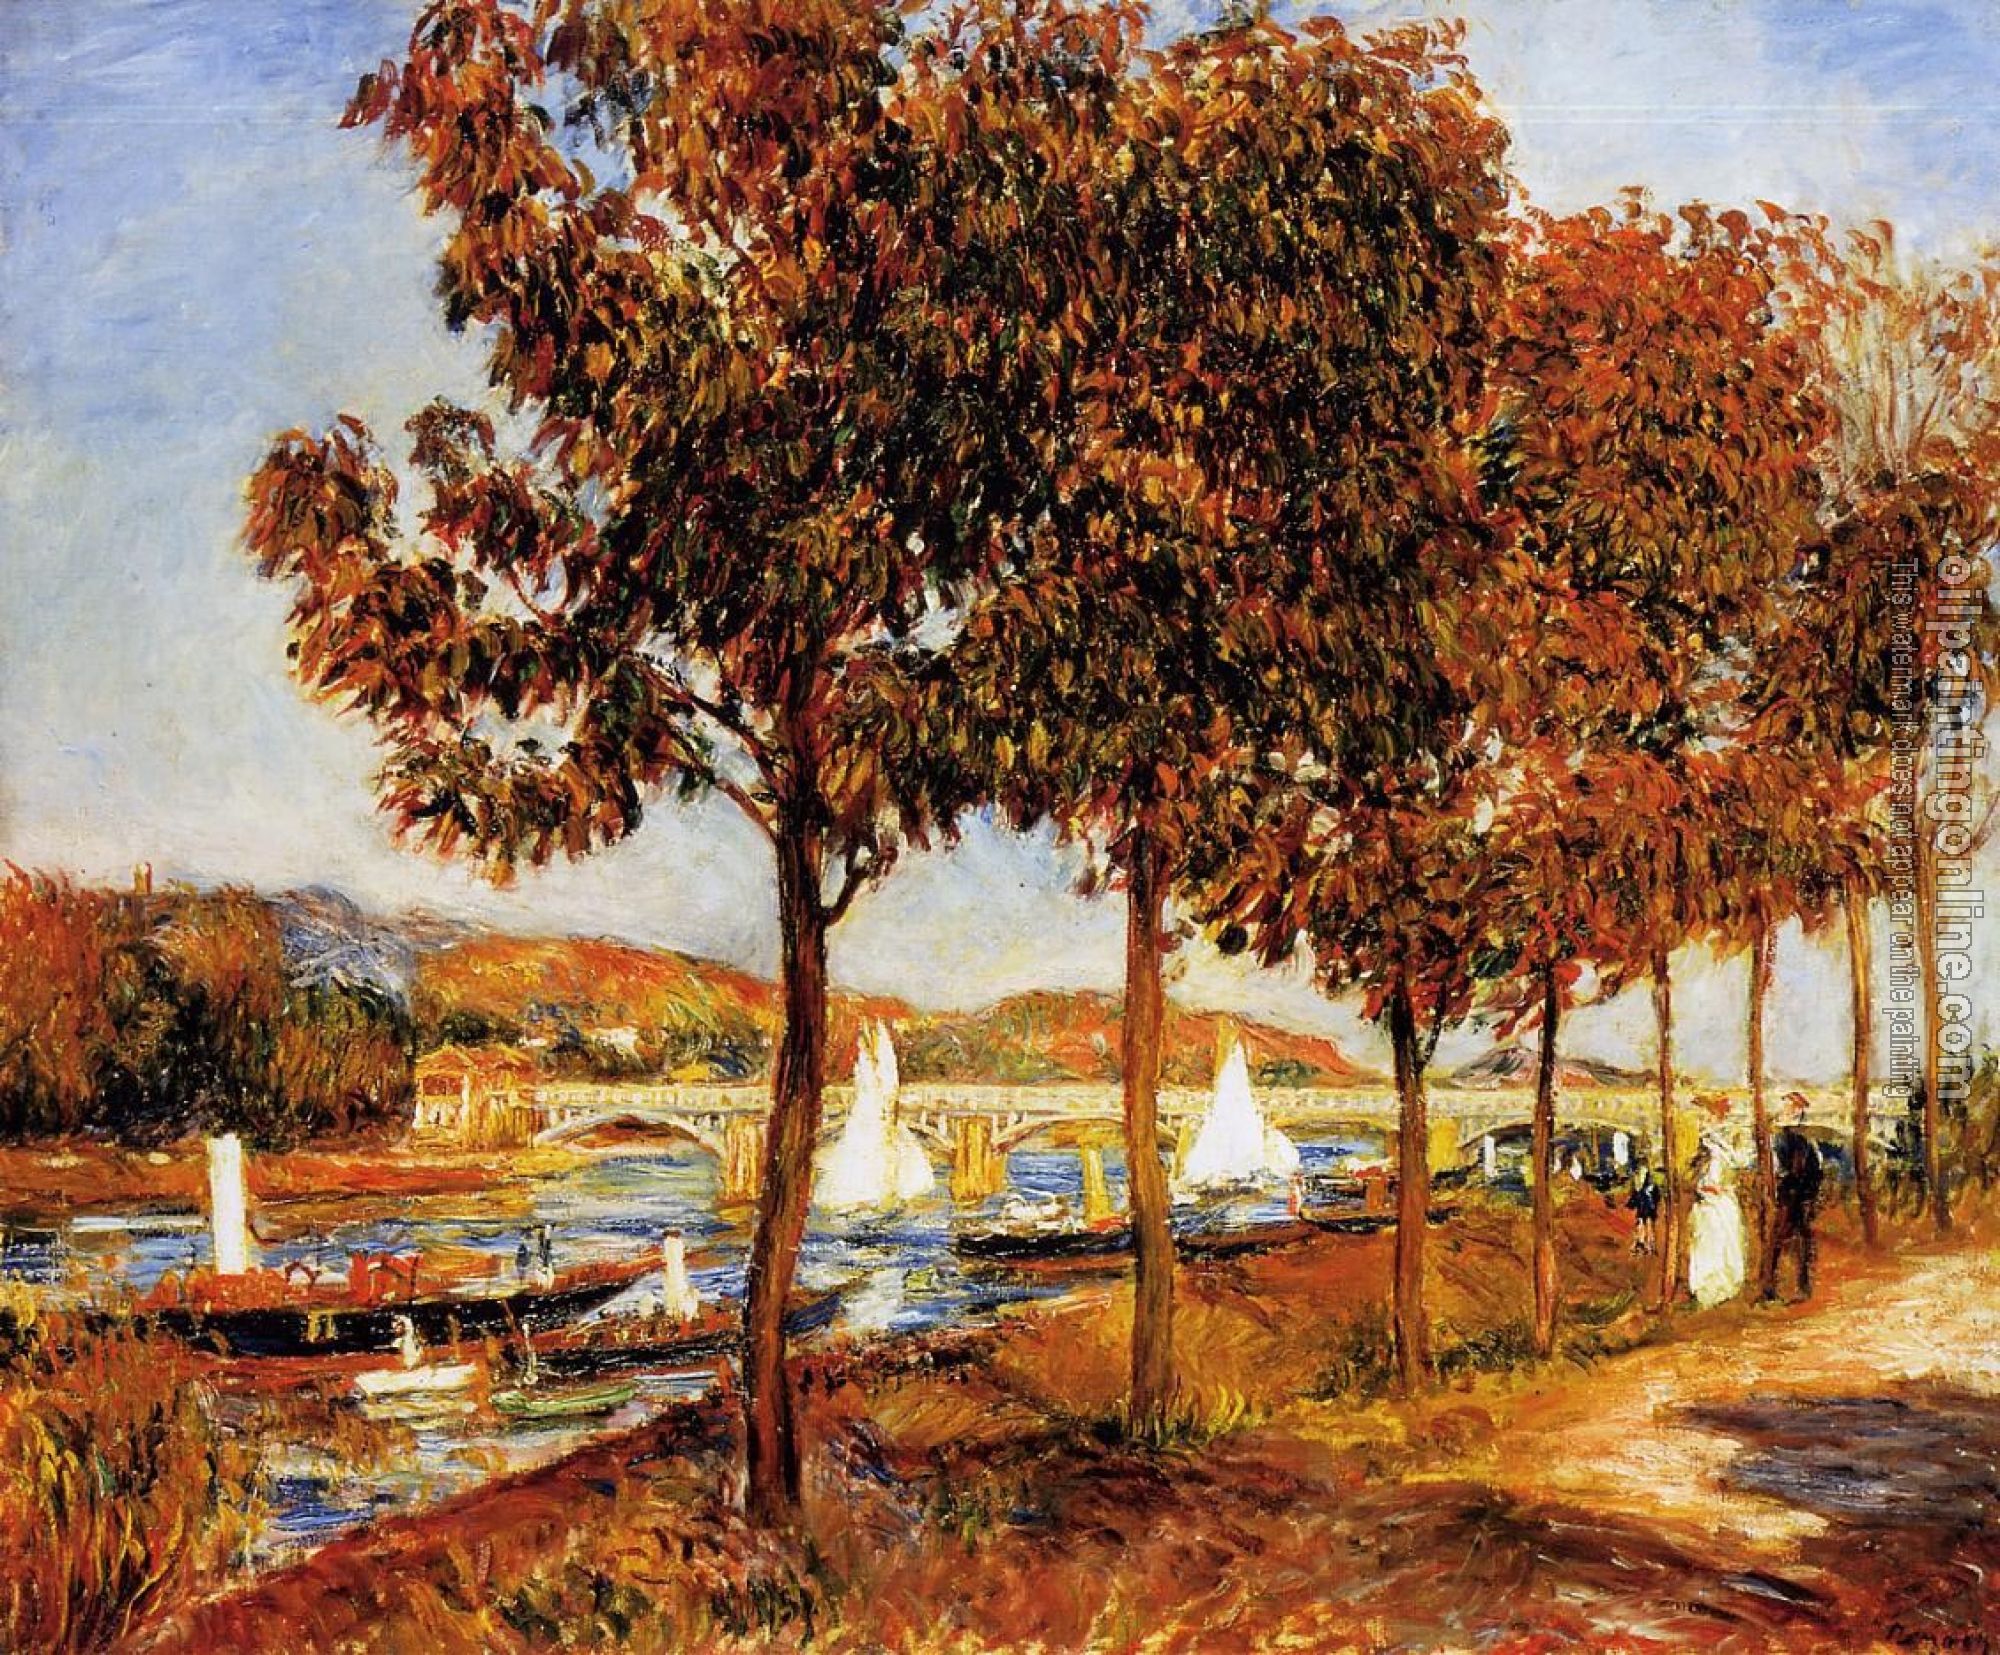 Renoir, Pierre Auguste - The Bridge at Argenteuil in Autumn